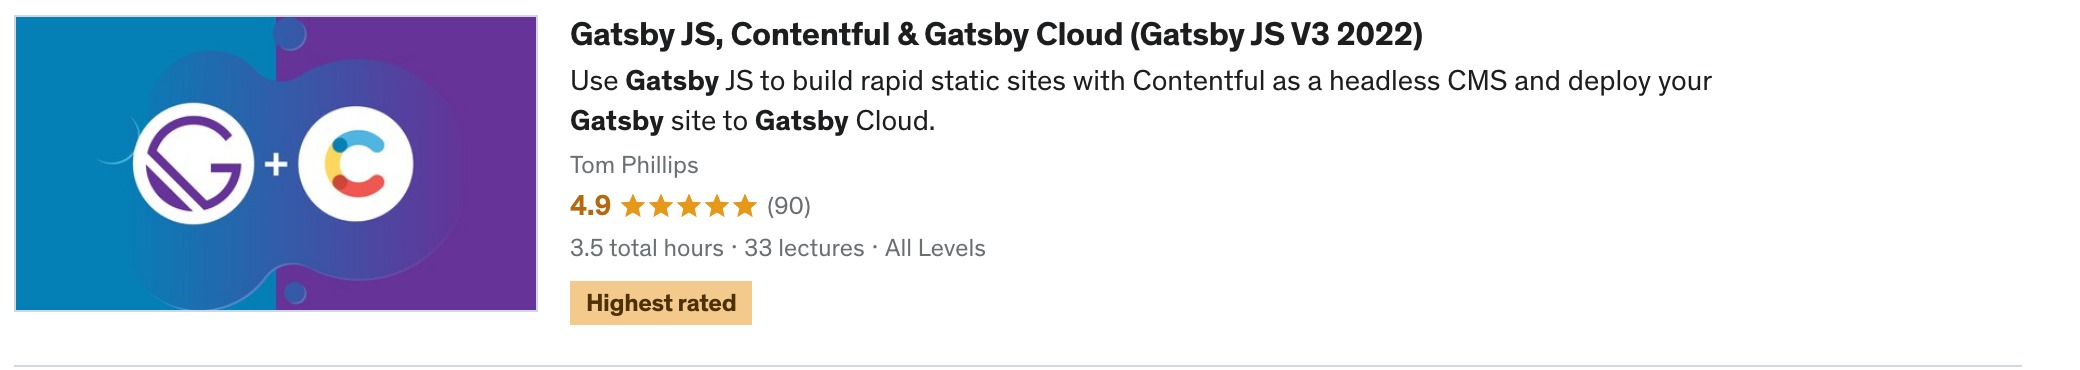 Gatsby JS, Contentful & Gatsby Cloud (Gatsby JS V3 2022)